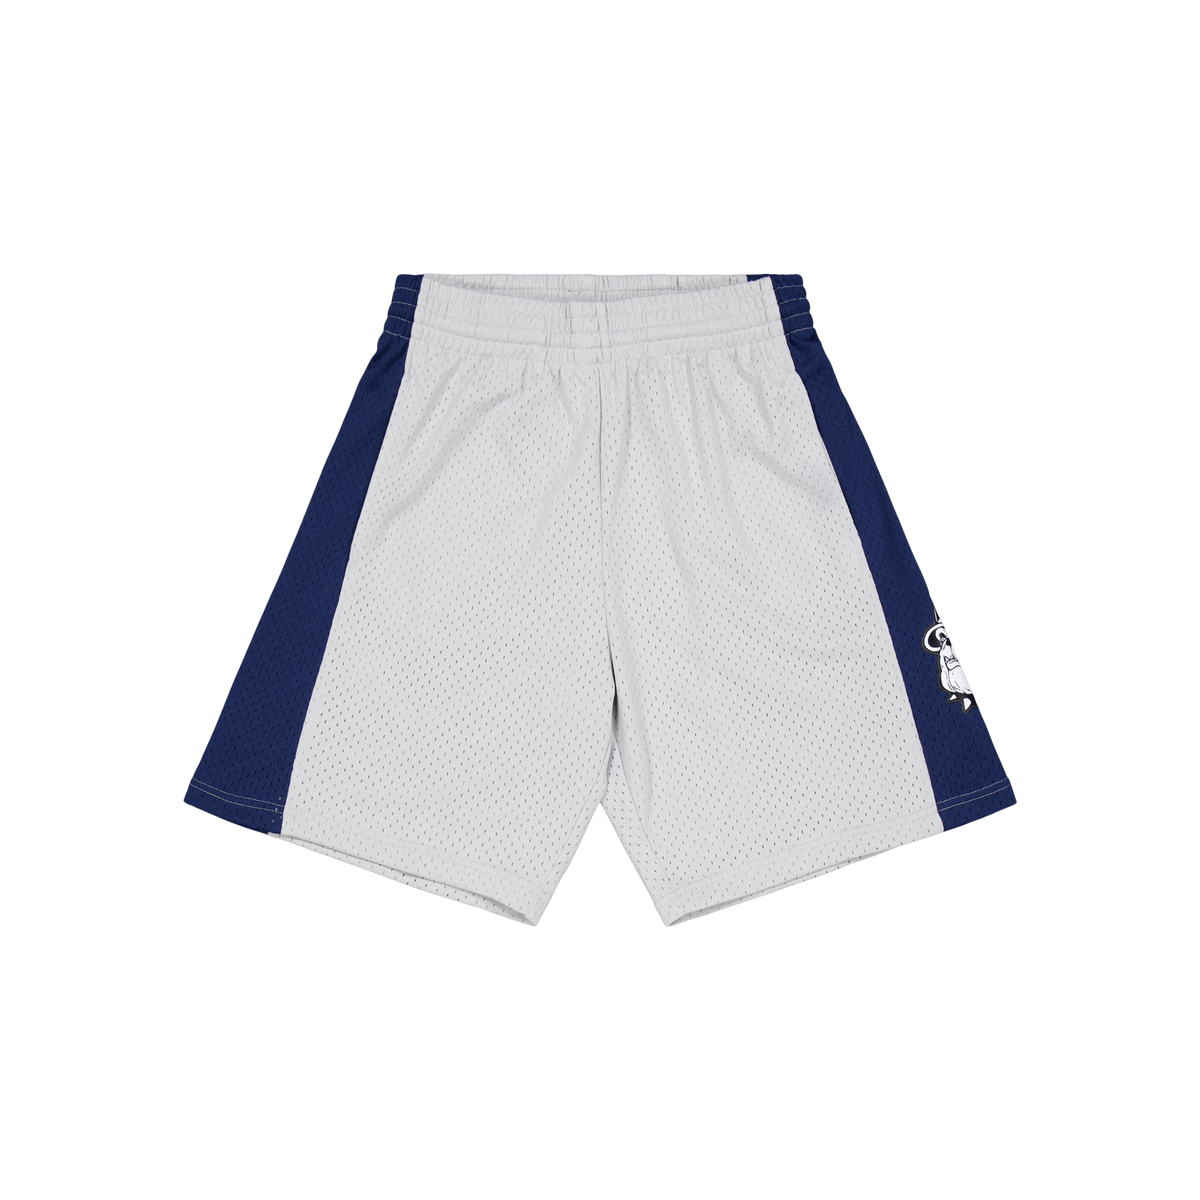 Swingman Shorts - Georgetown 1 Chrome